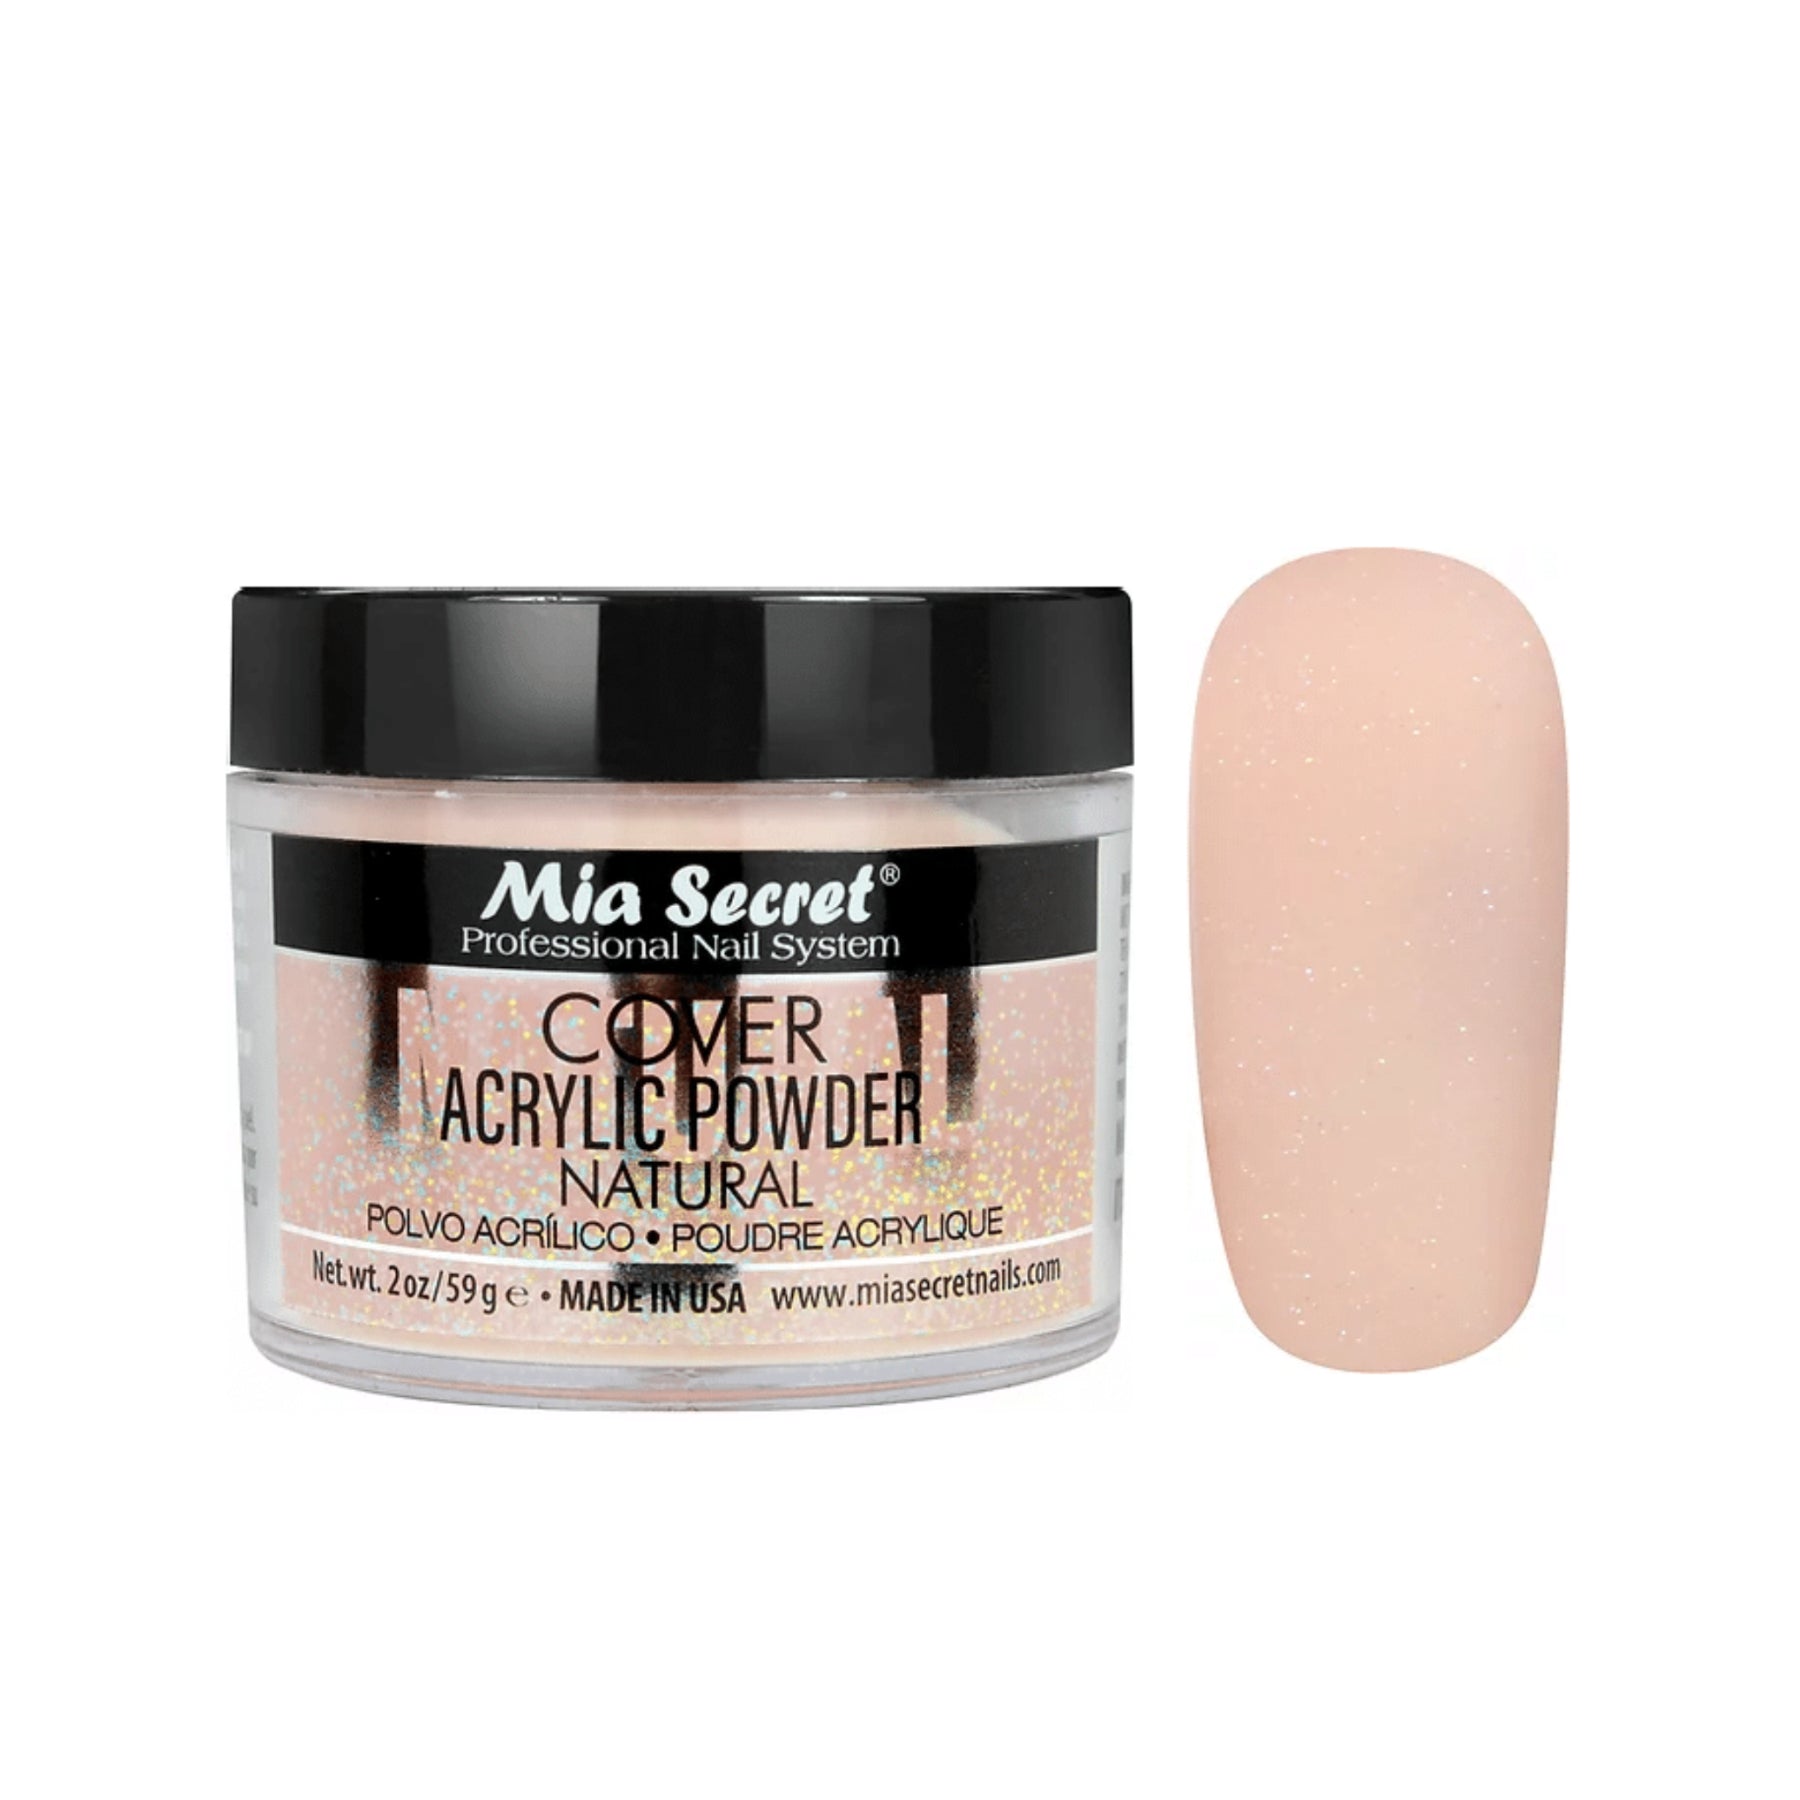 Mia Secret Acrylic Powder - Cover Natural